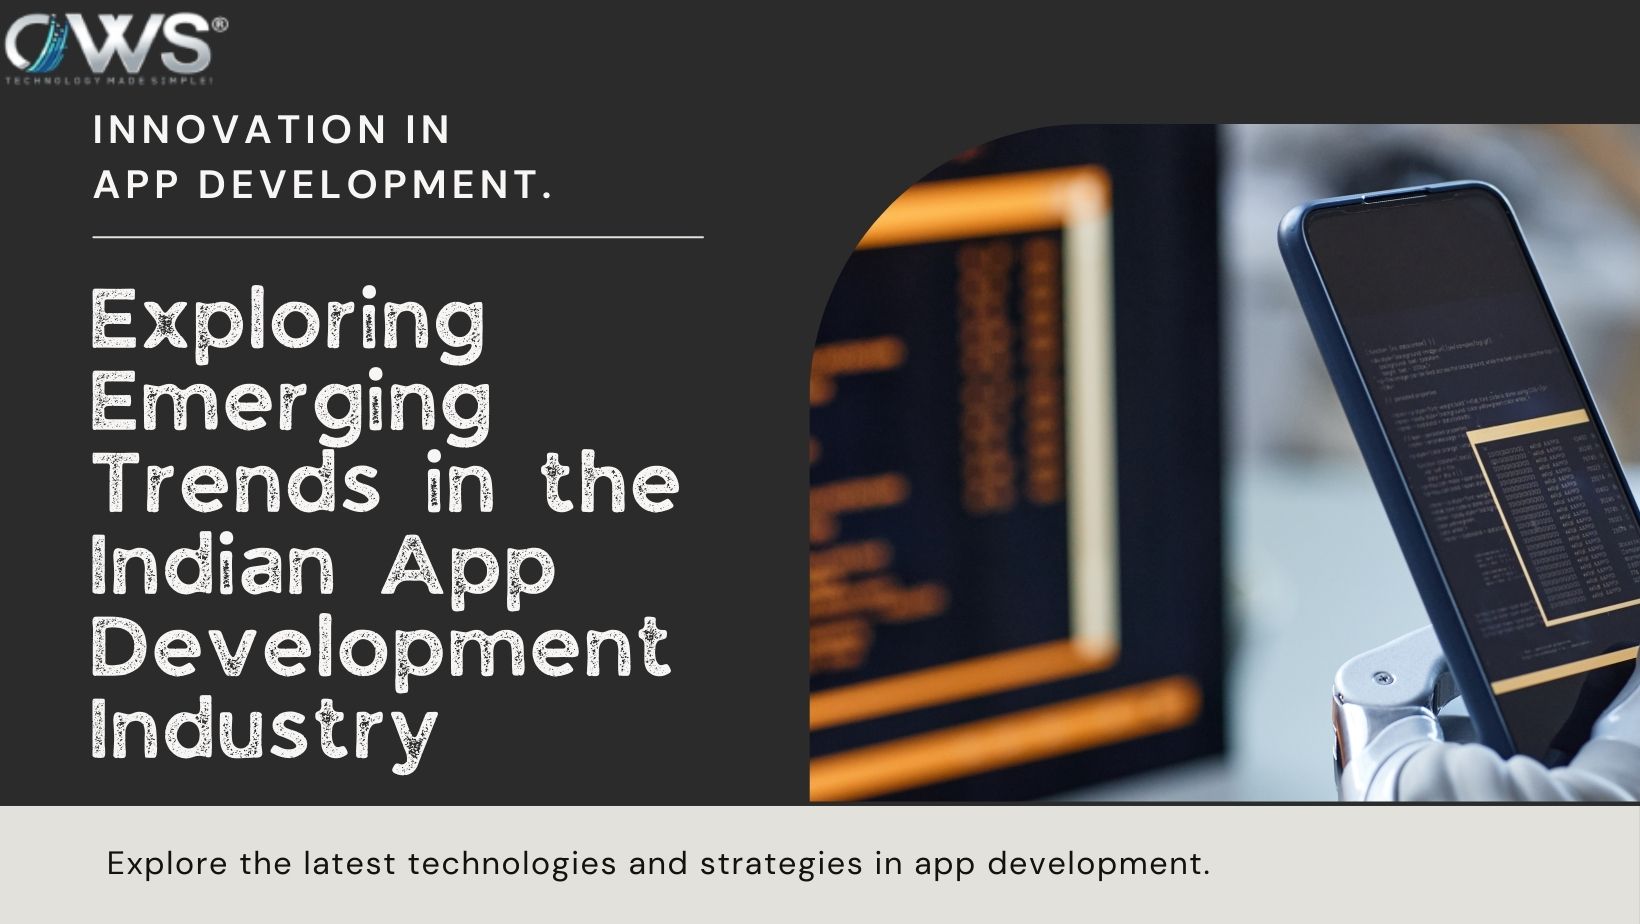 App development industry